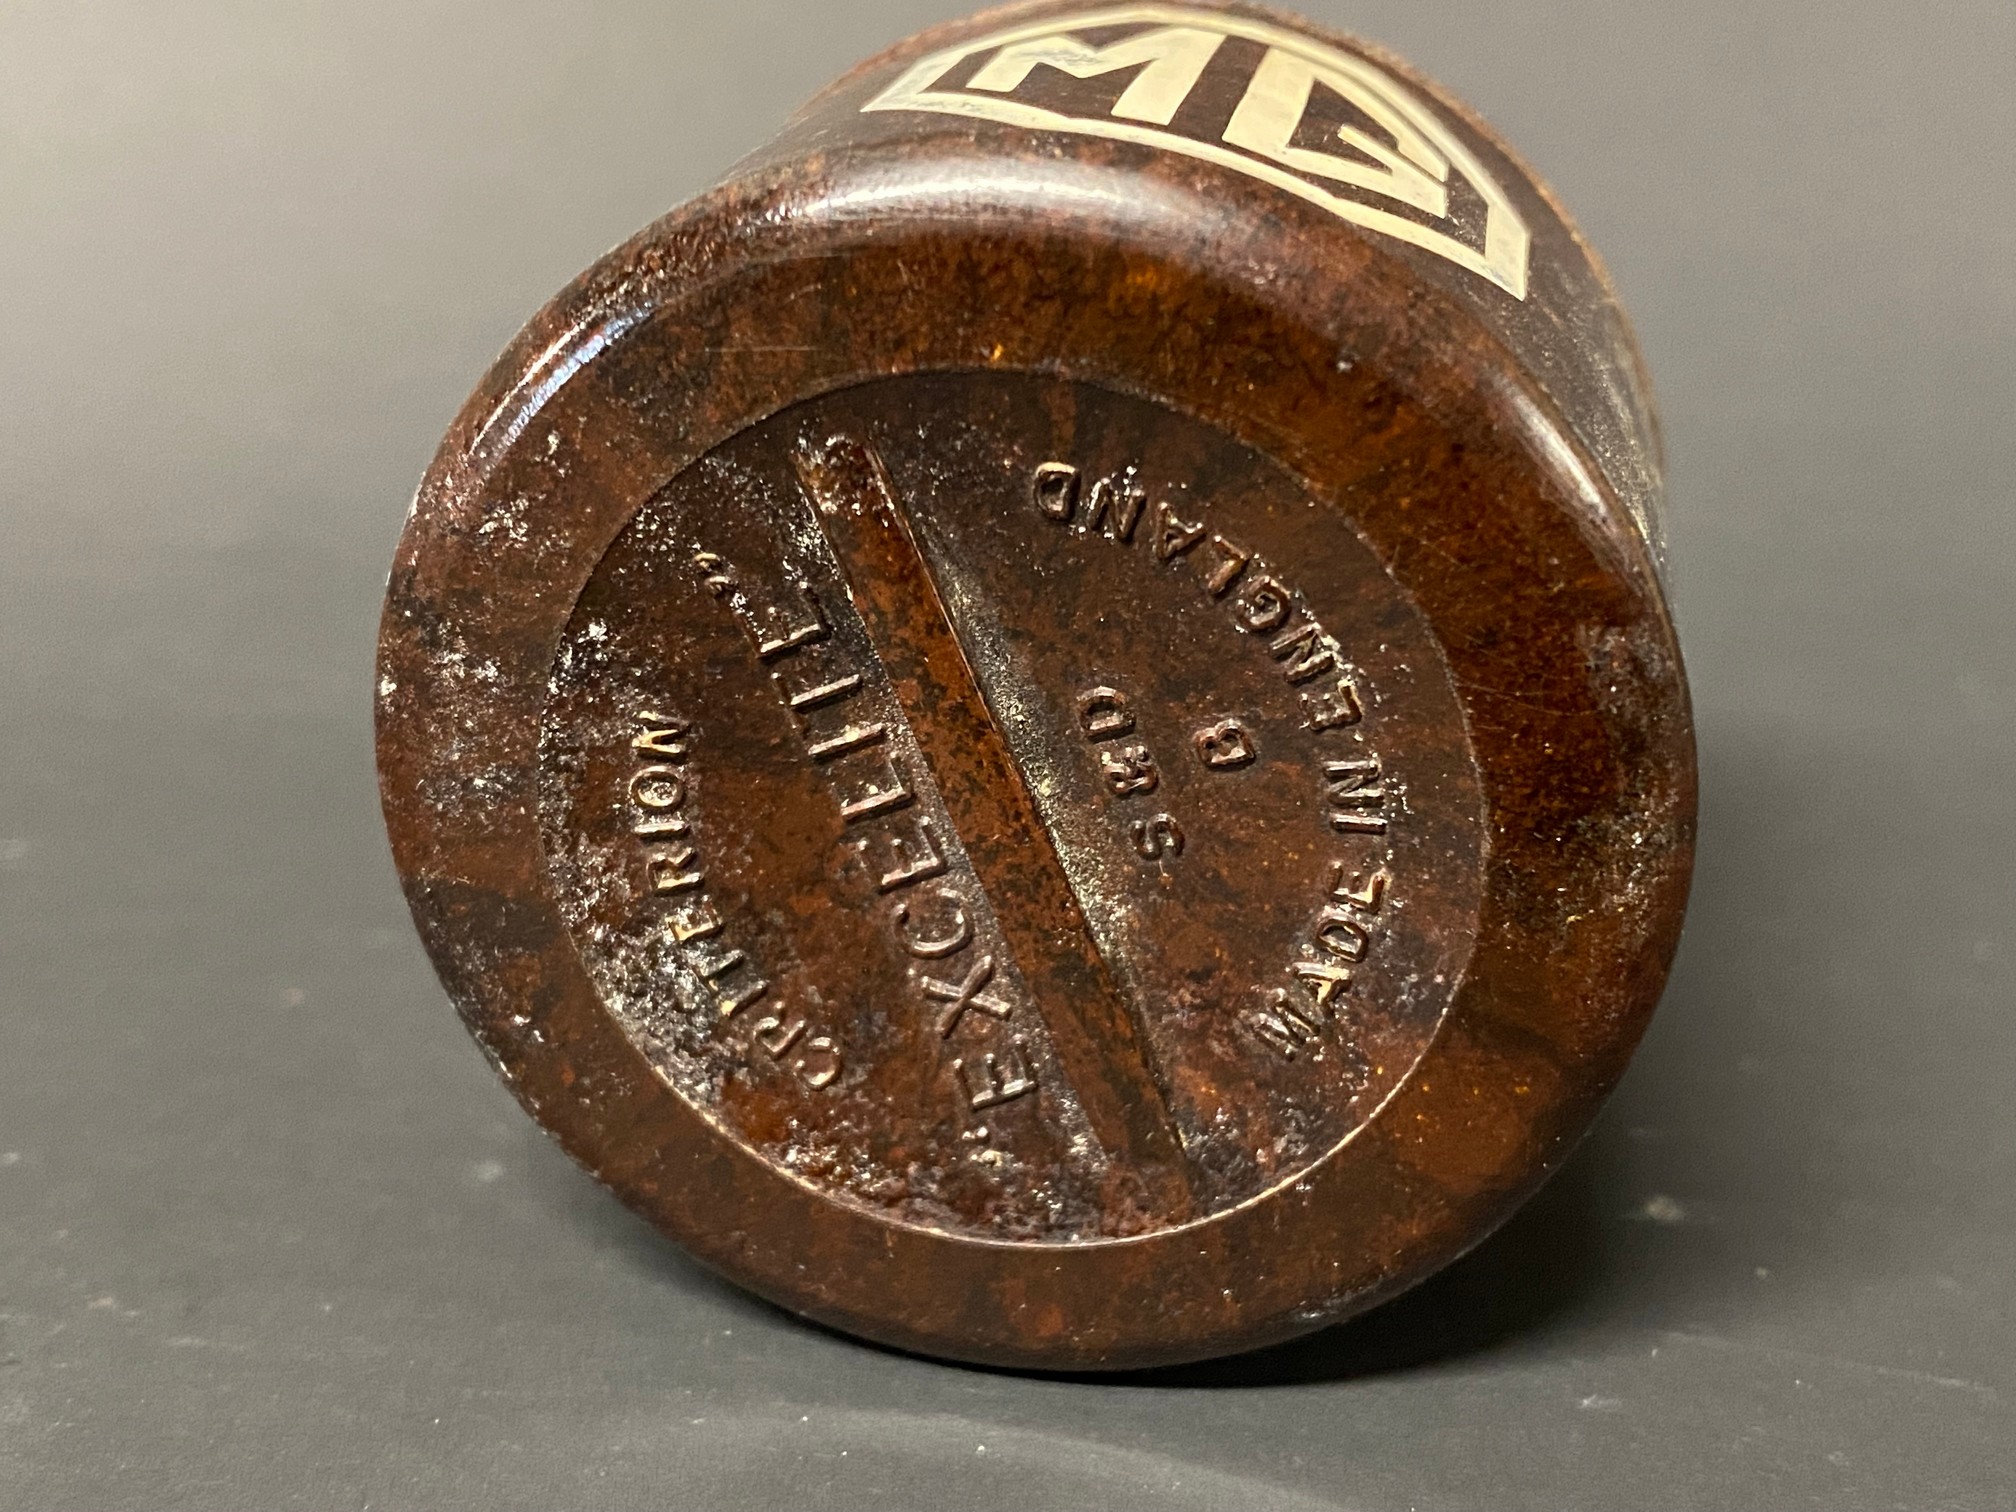 A bakelite MG branded ashtray. - Image 2 of 2